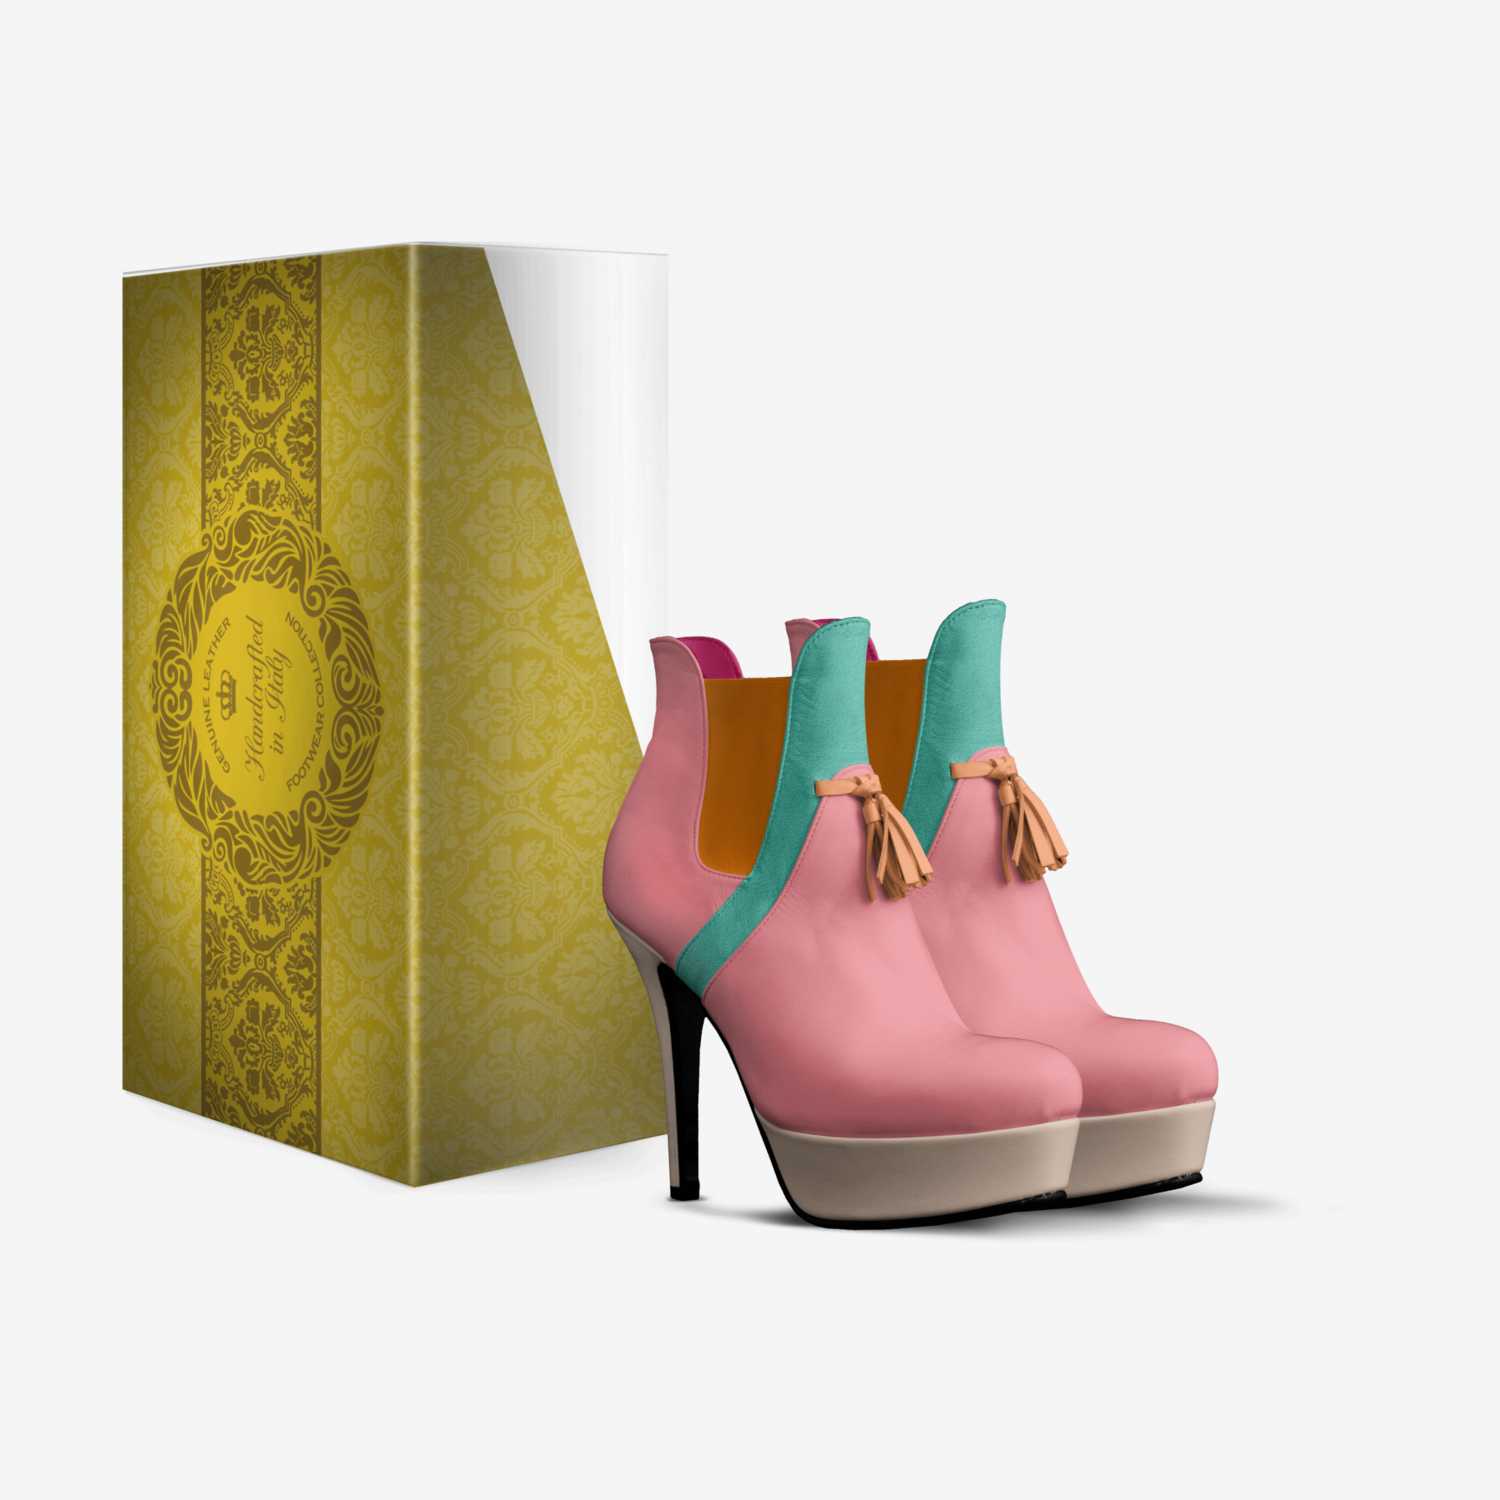 hanalei bae custom made in Italy shoes by Liz Millar | Box view